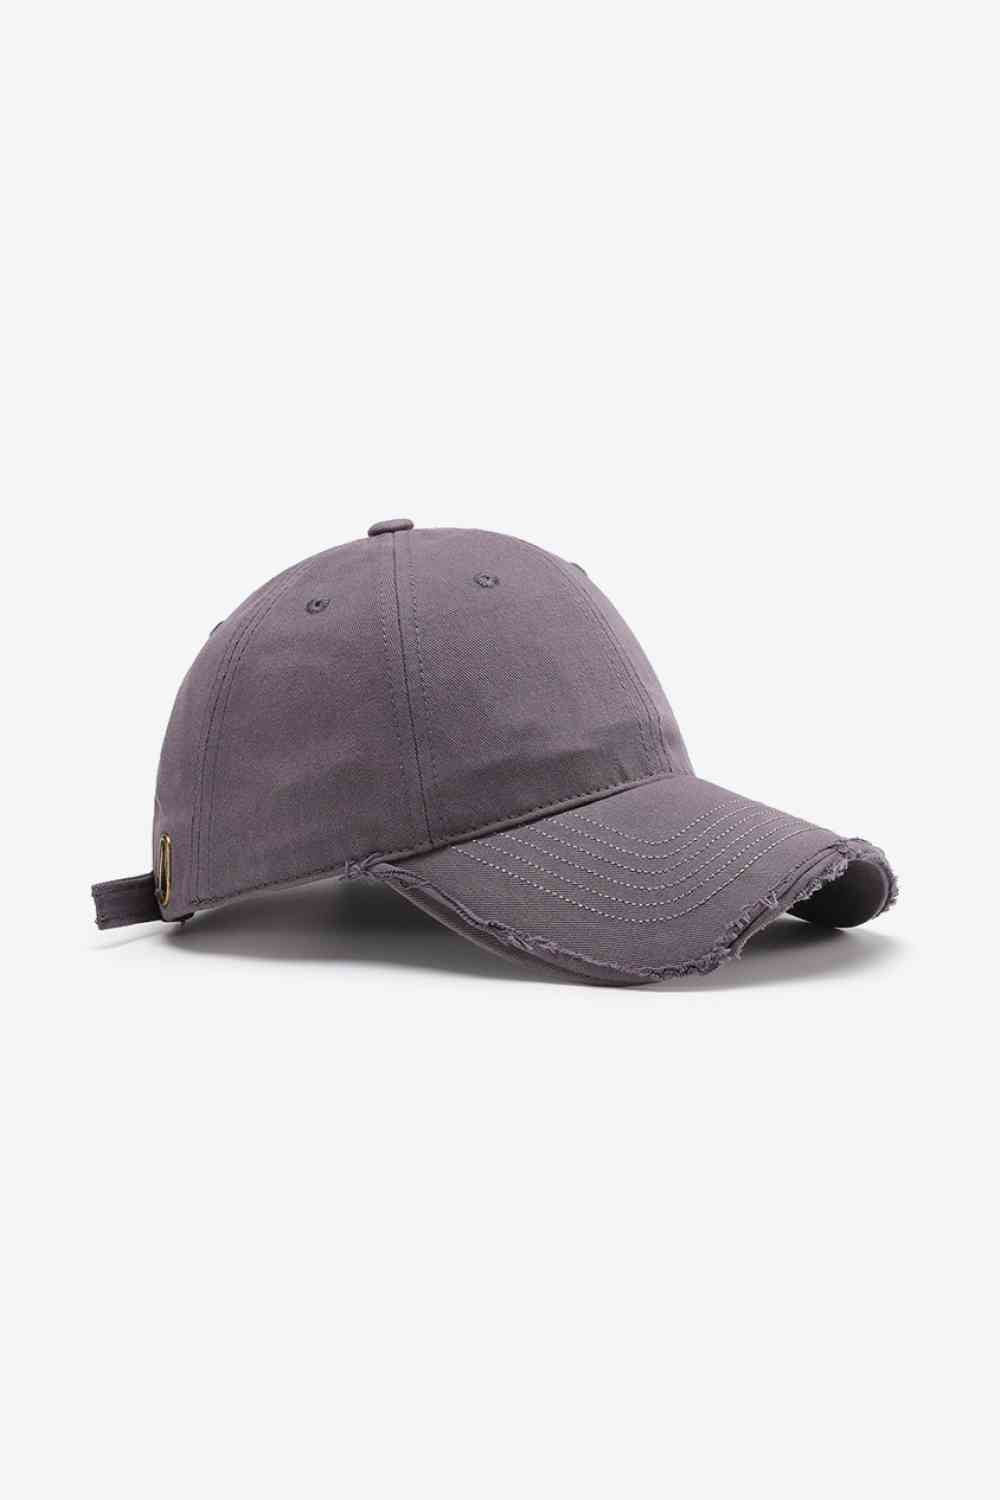 Distressed Adjustable Baseball Cap Dusty Purple One Size